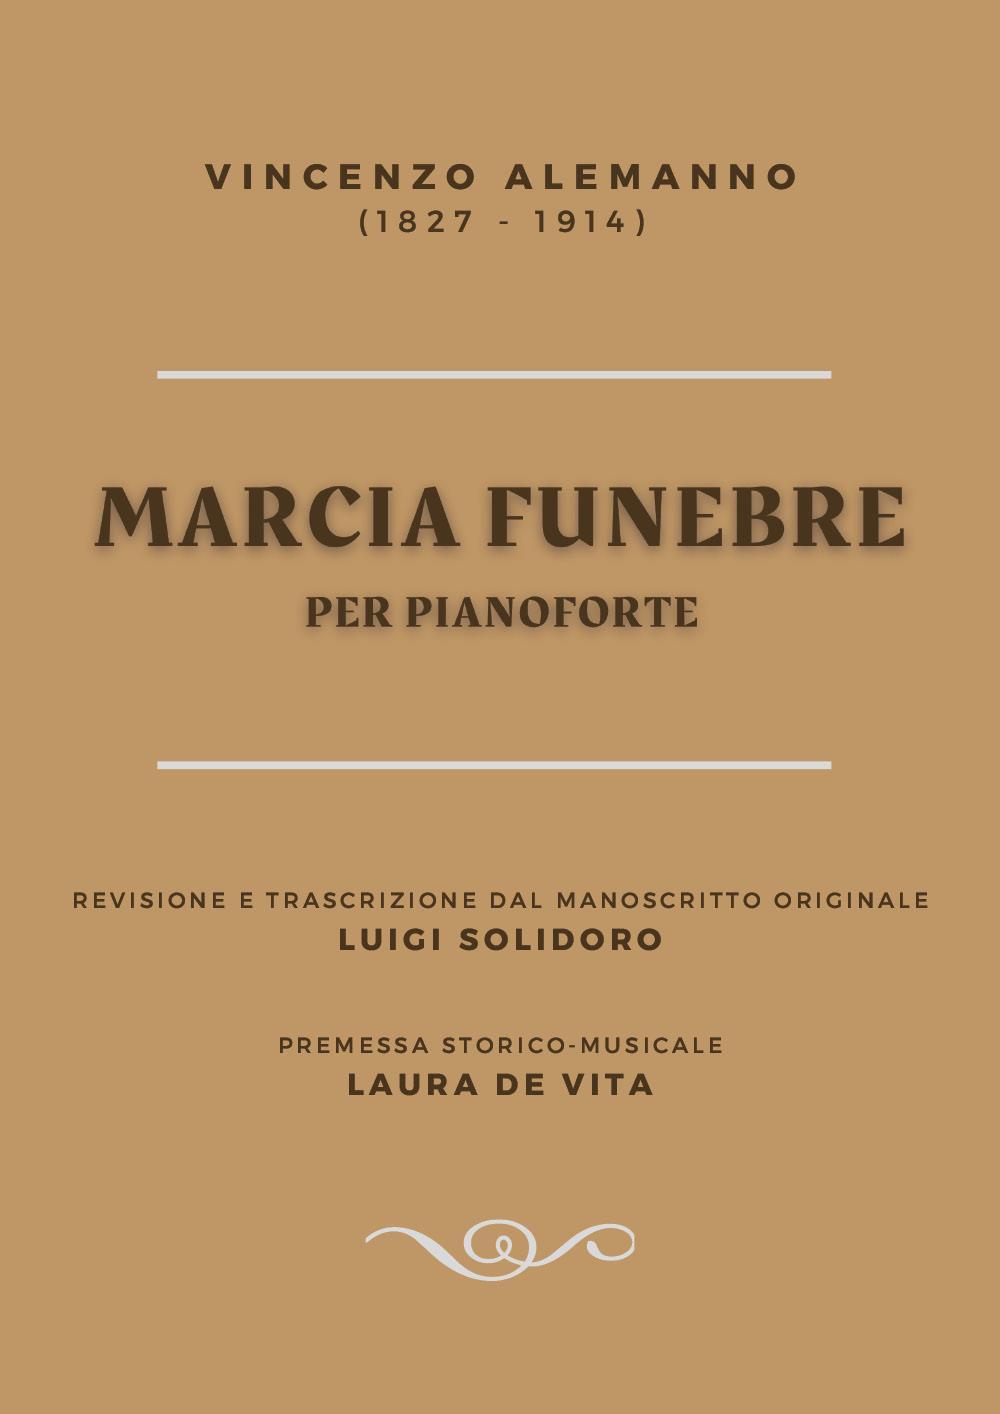 Marcia funebre